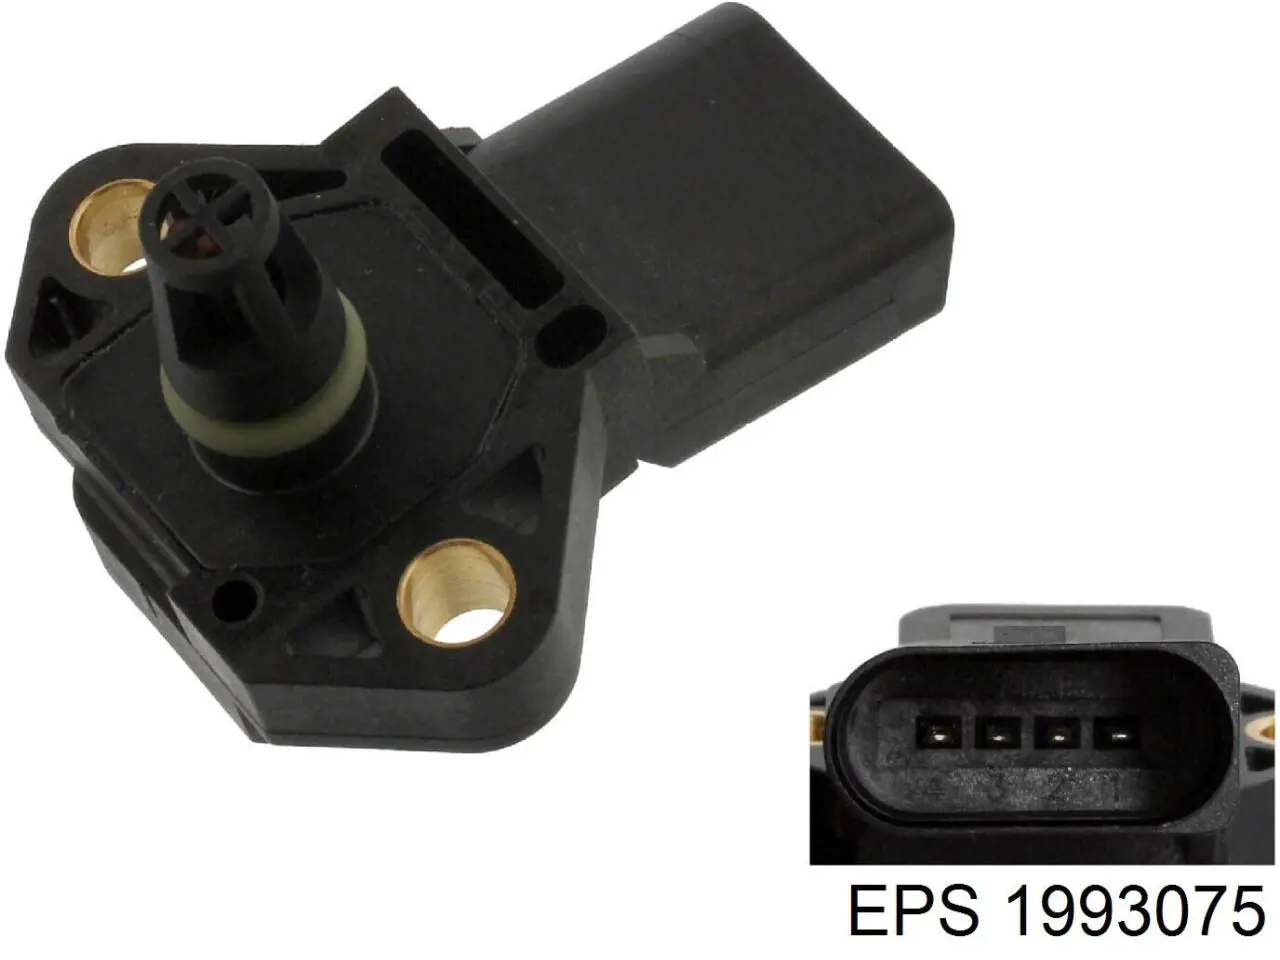 1993075 EPS sensor de presion de carga (inyeccion de aire turbina)